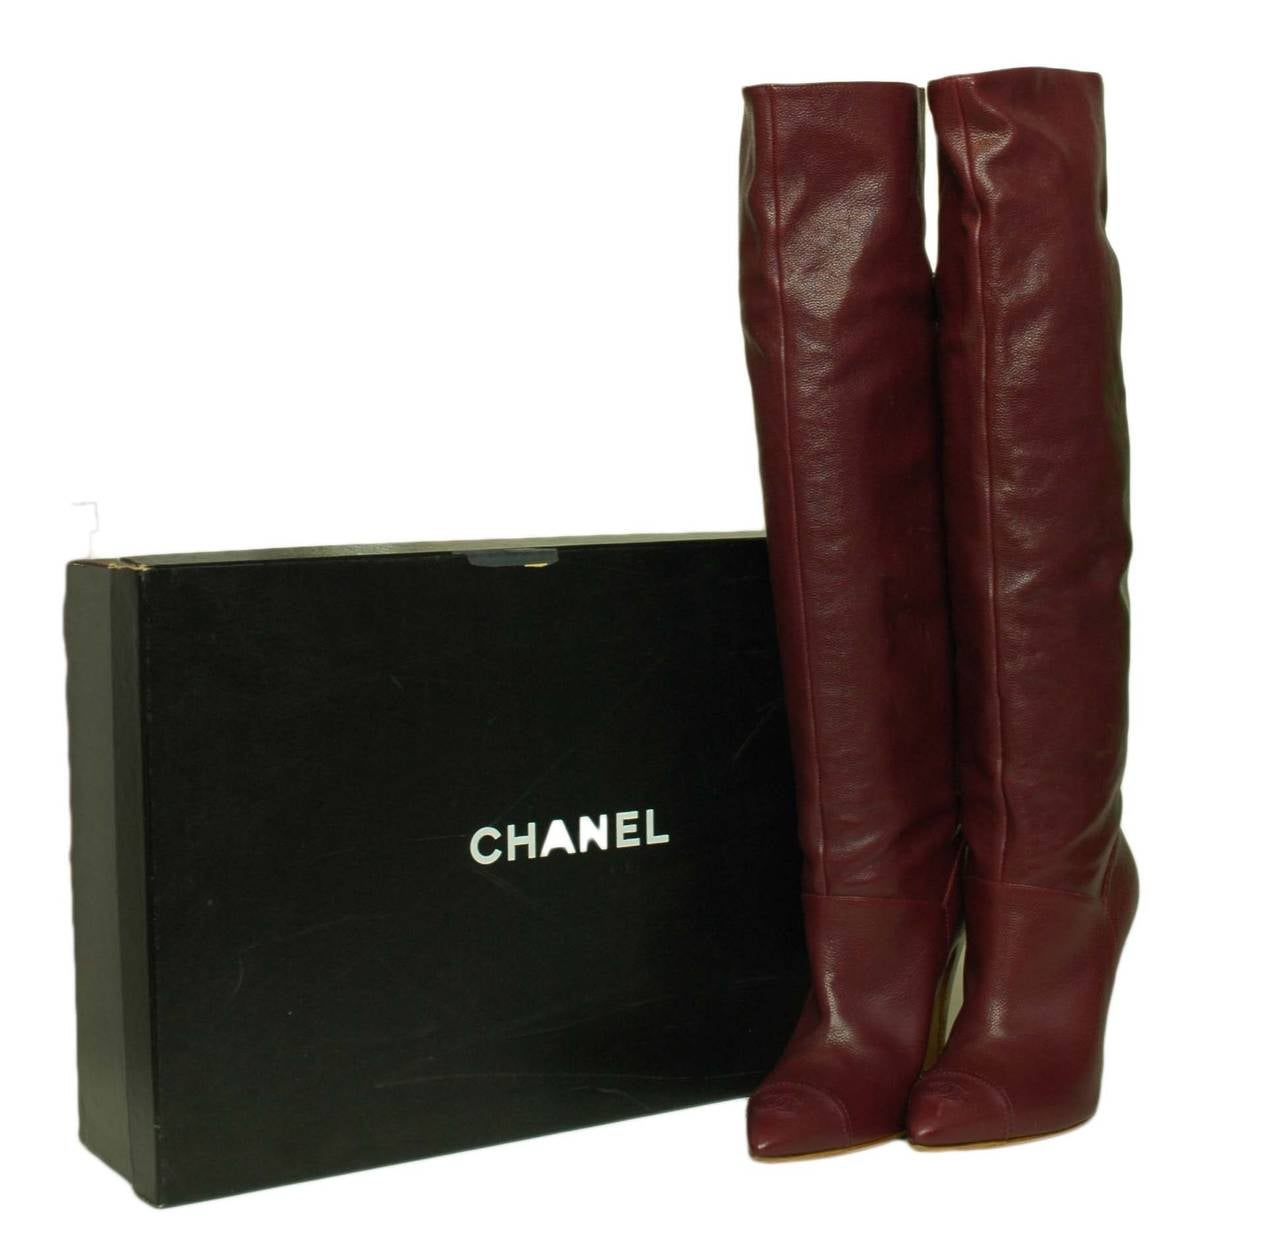 CHANEL Burgundy Caviar Leather Tall Boots sz 39.5 1